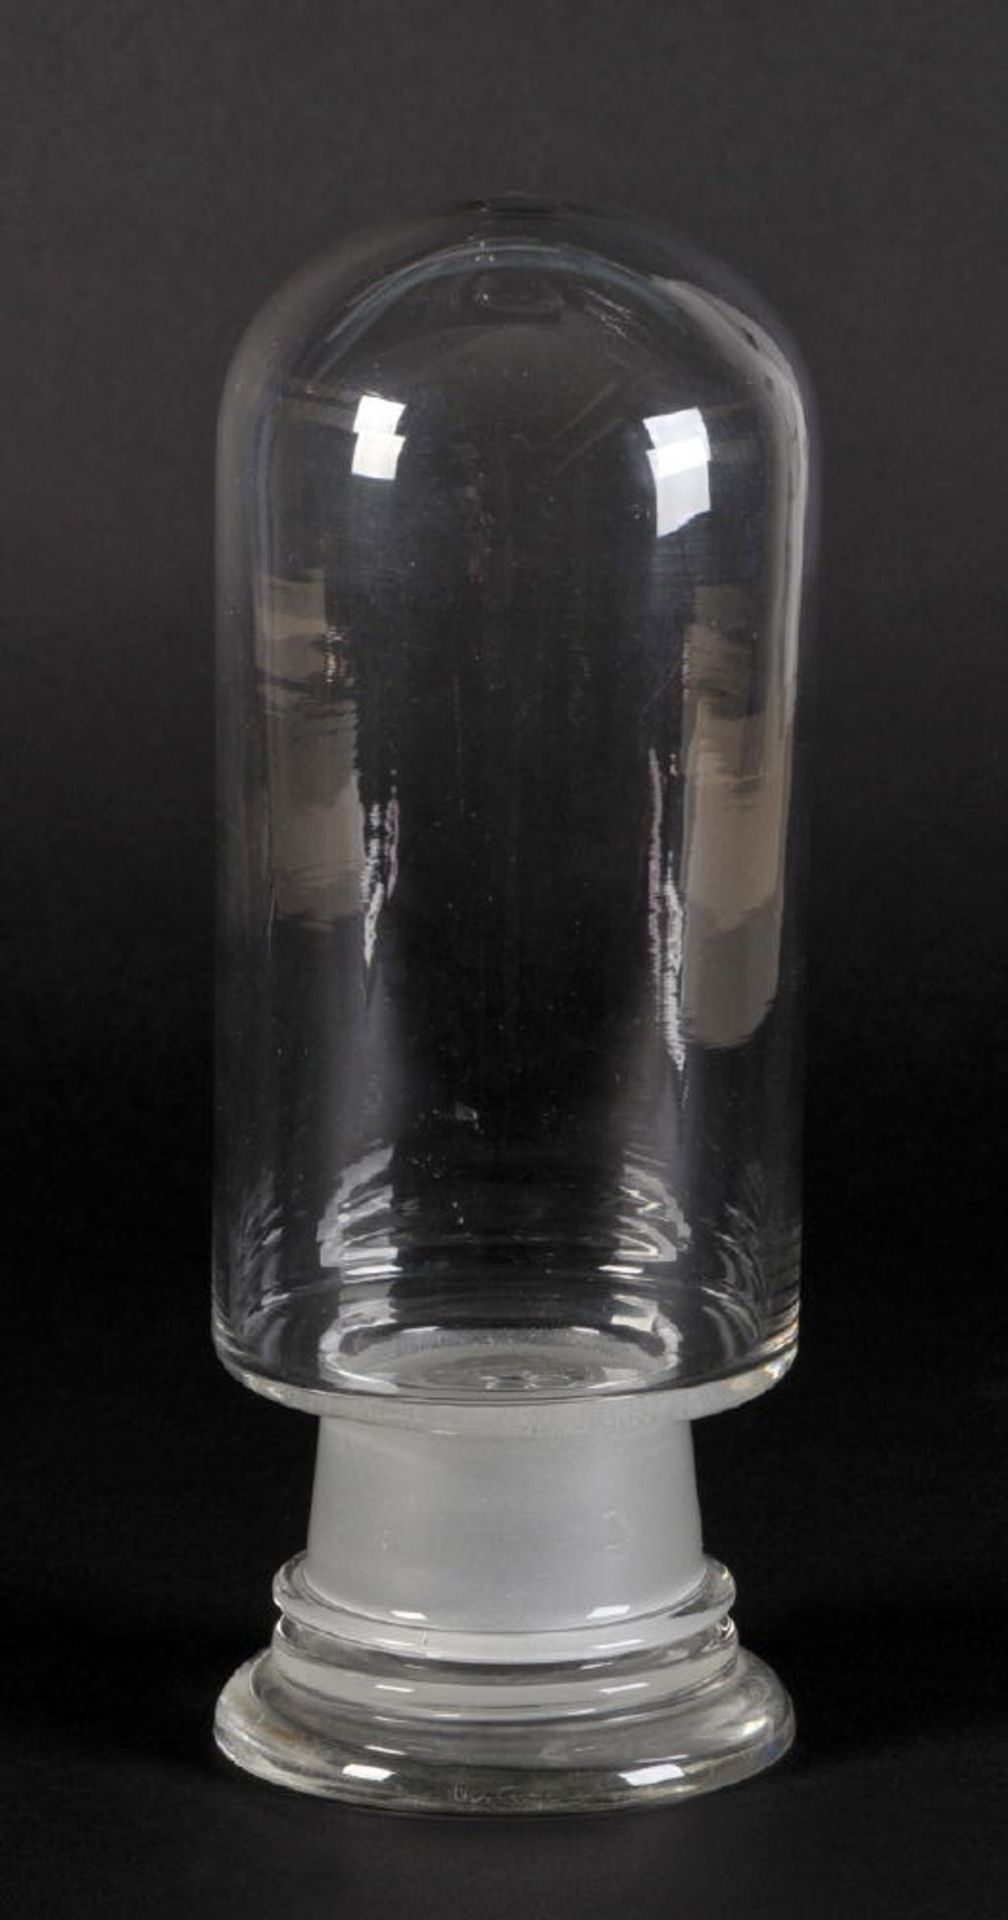 Flasche mit Stöpselfarbloses Glas, Zylinderform, Stöpsel als Standfuß, H= 23,5 cm